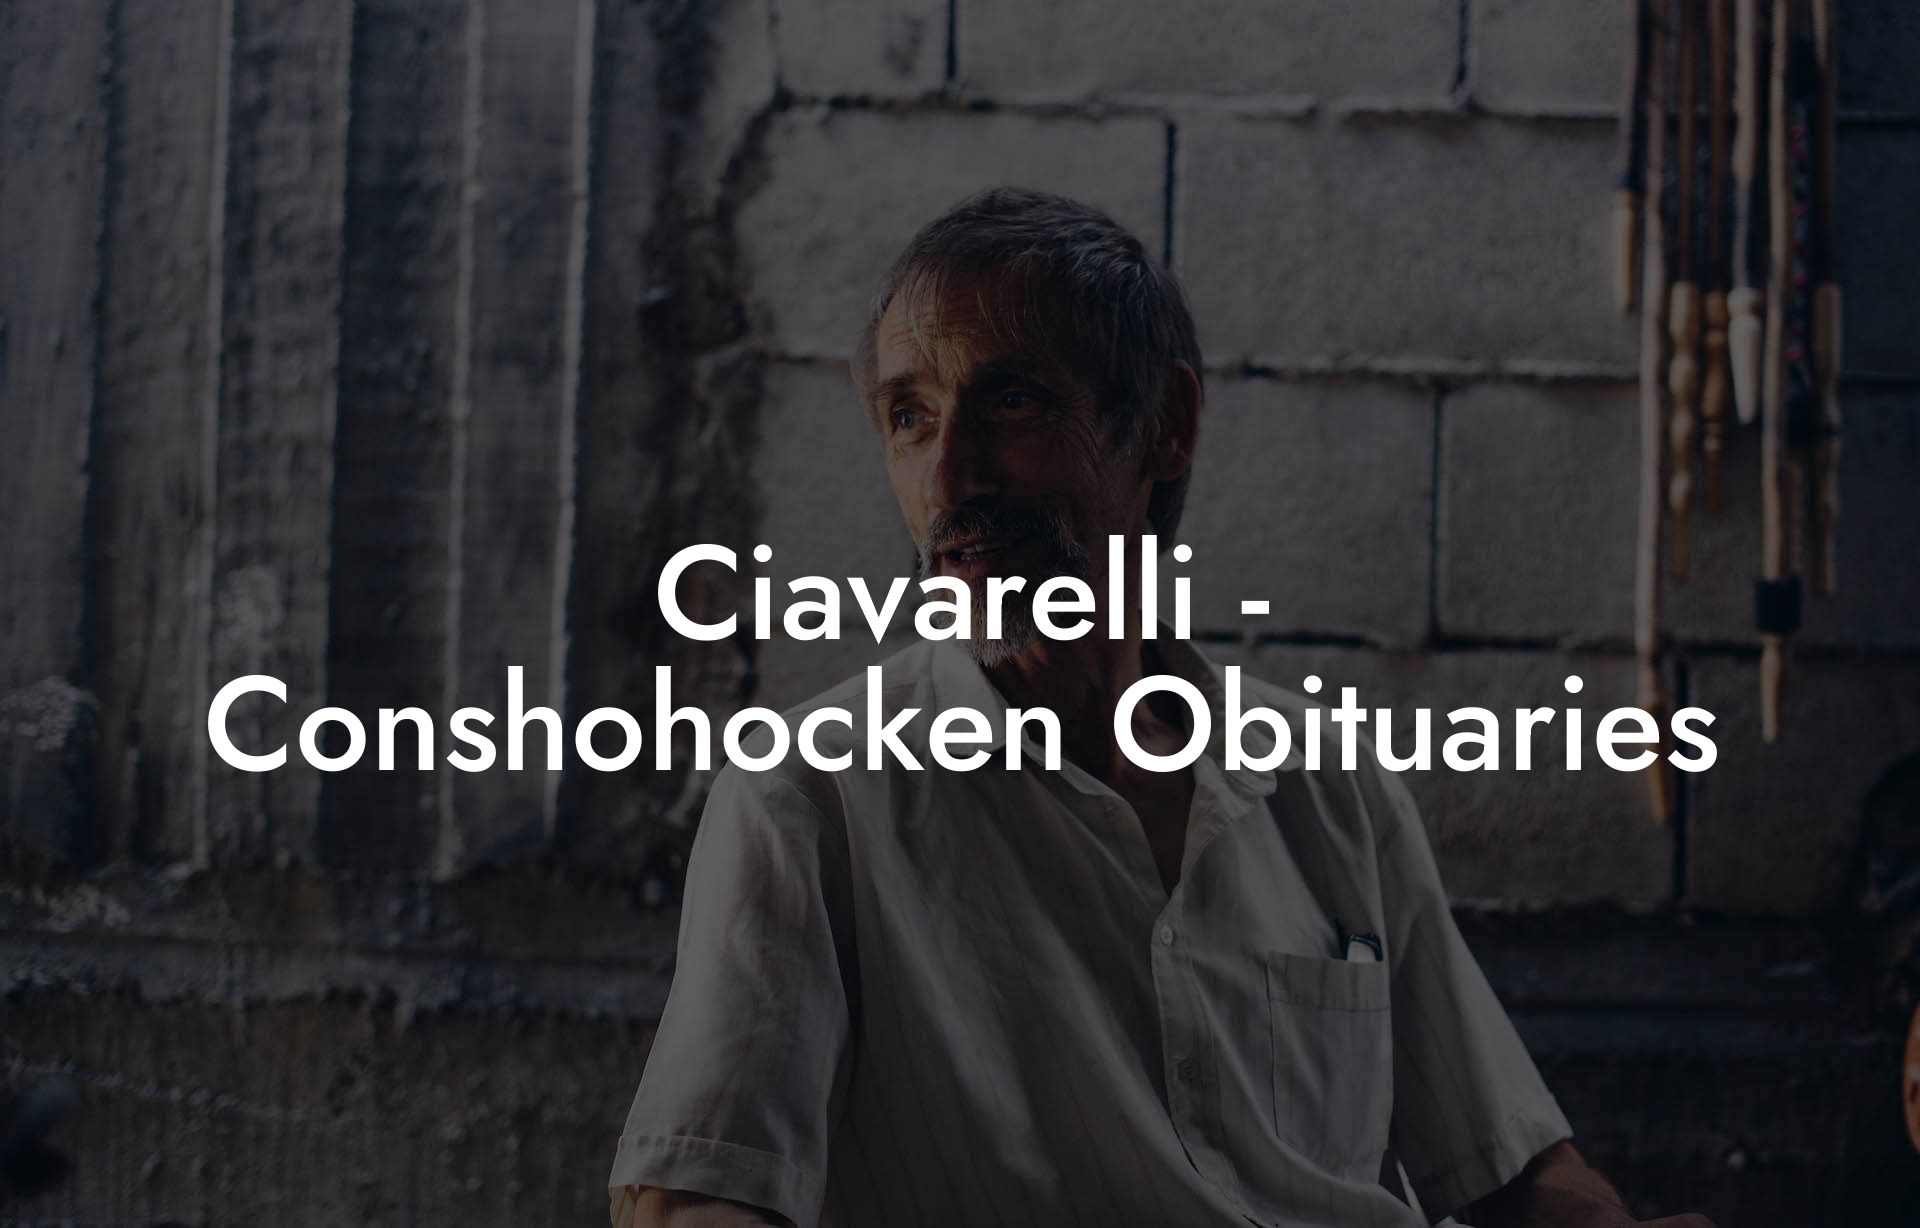 Ciavarelli - Conshohocken Obituaries